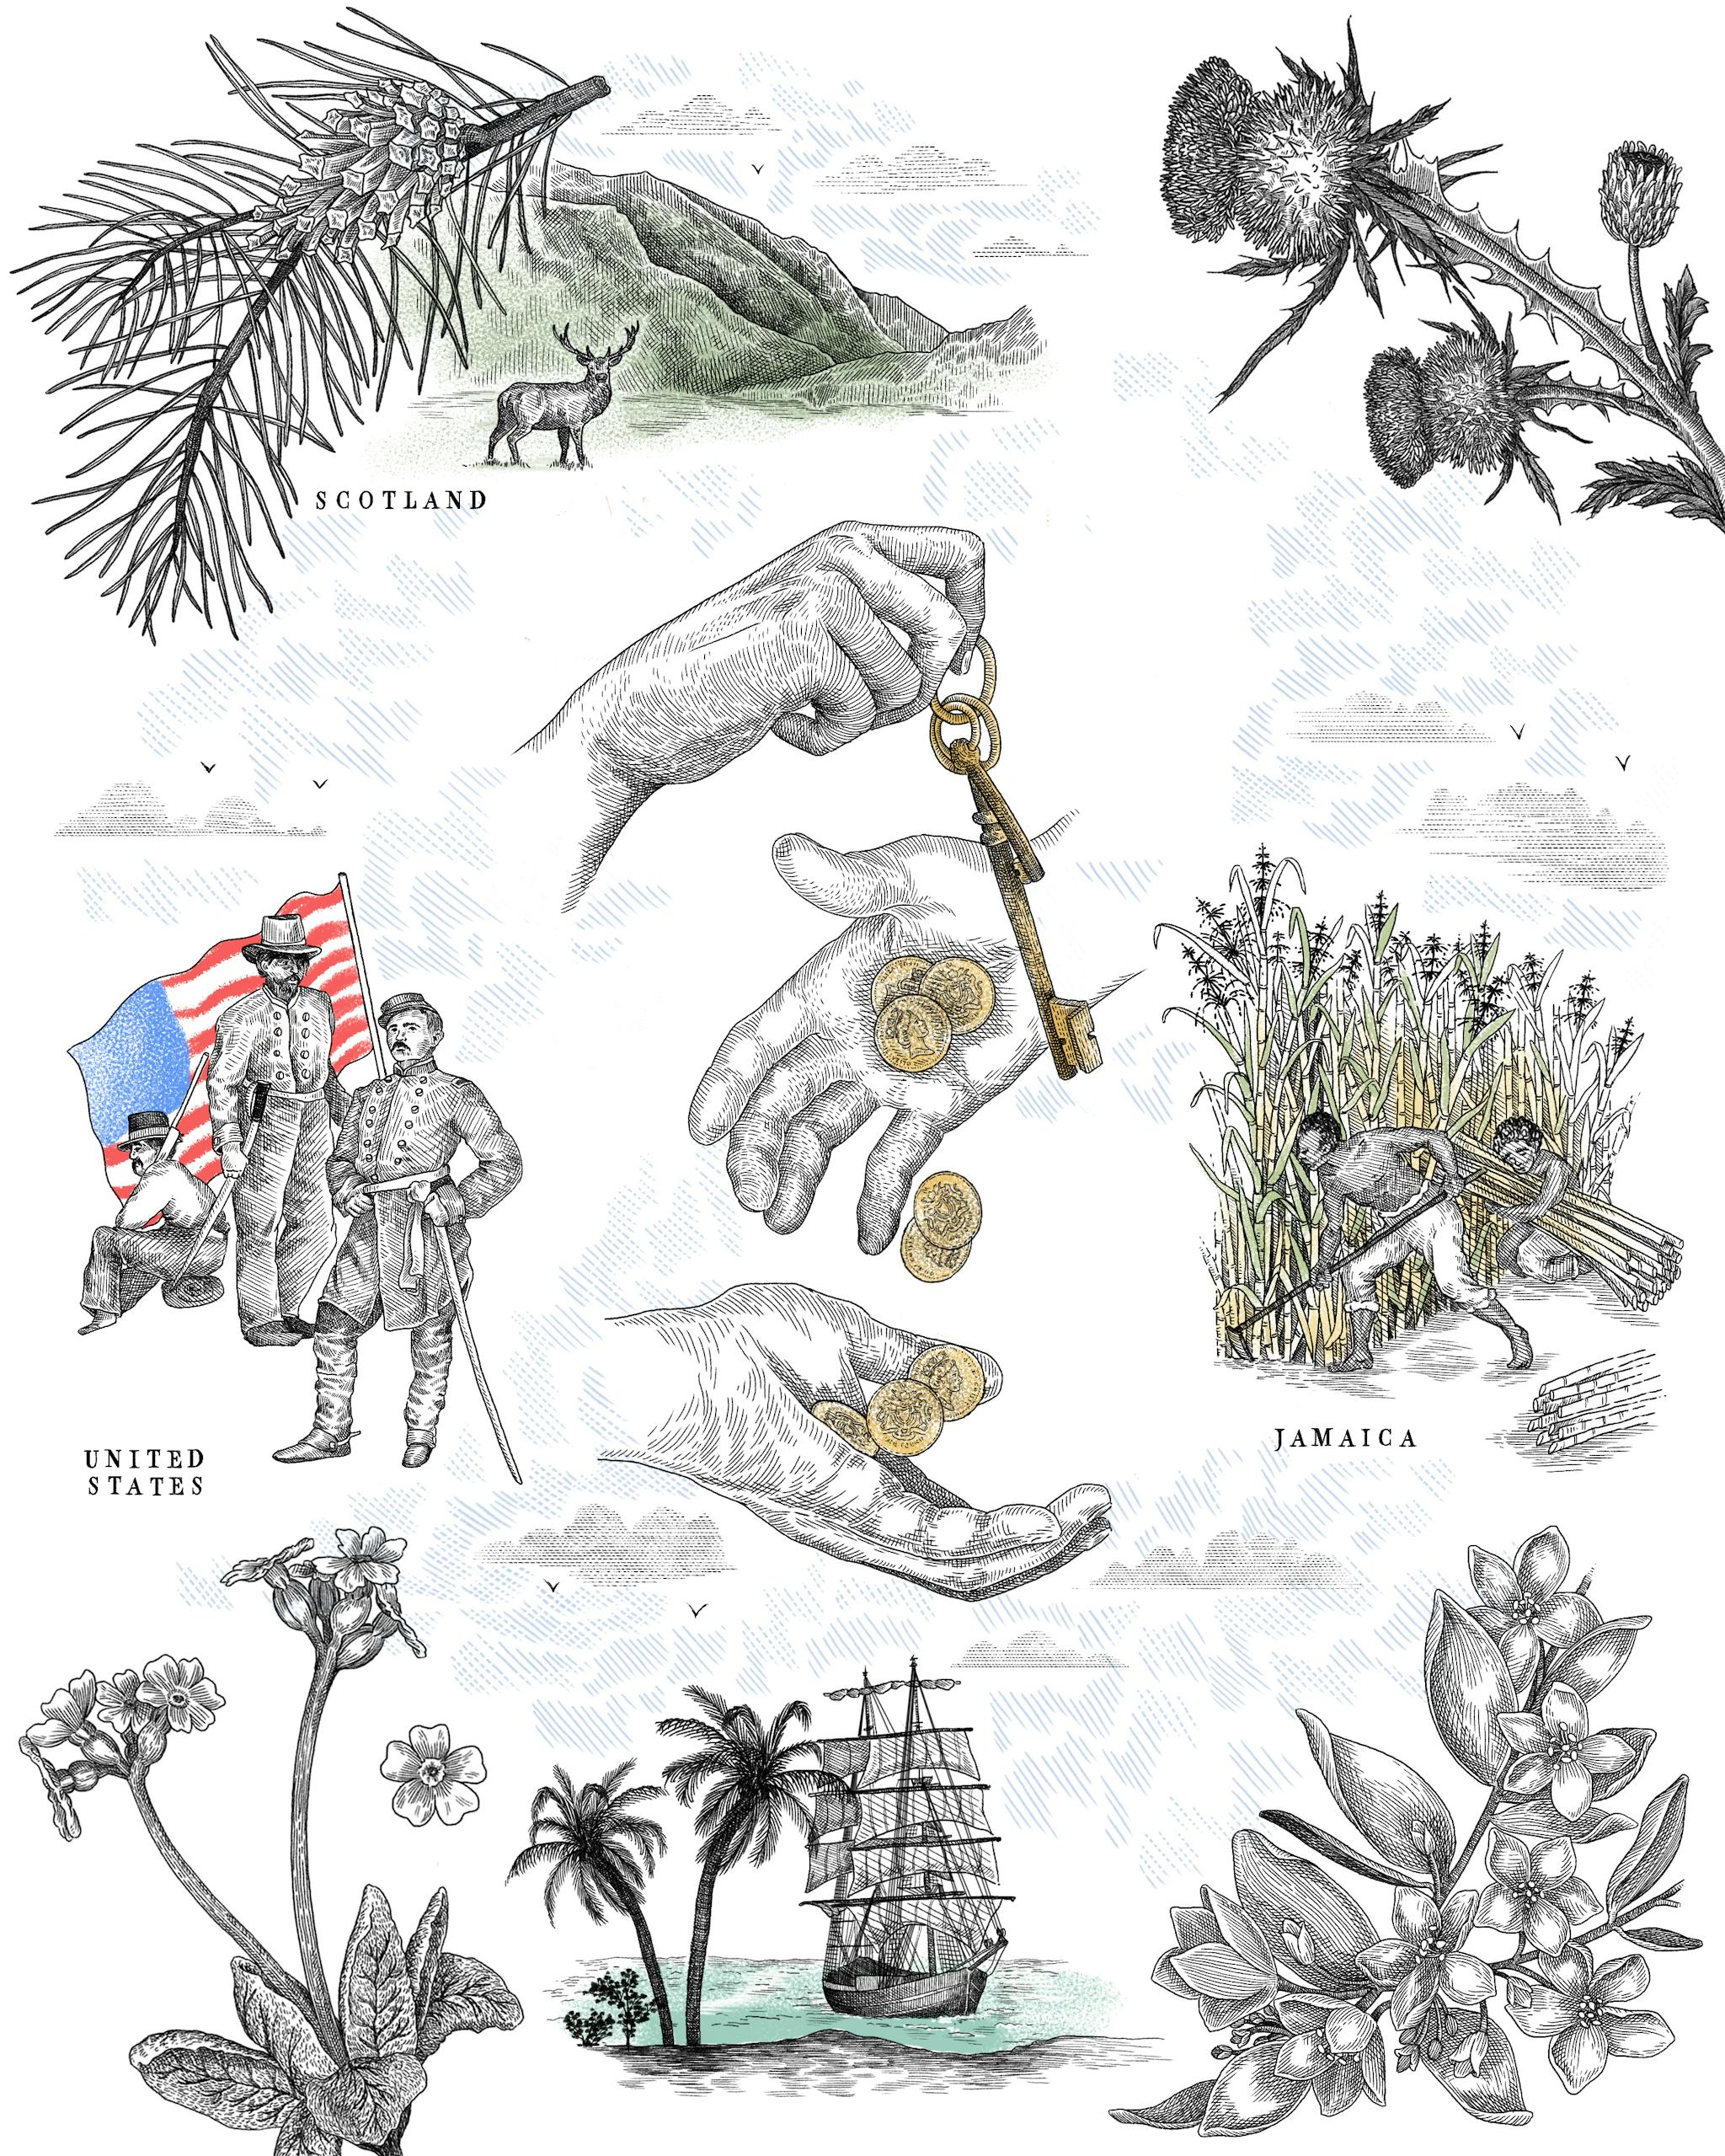 Composition of illustrations for Skibo Castle.